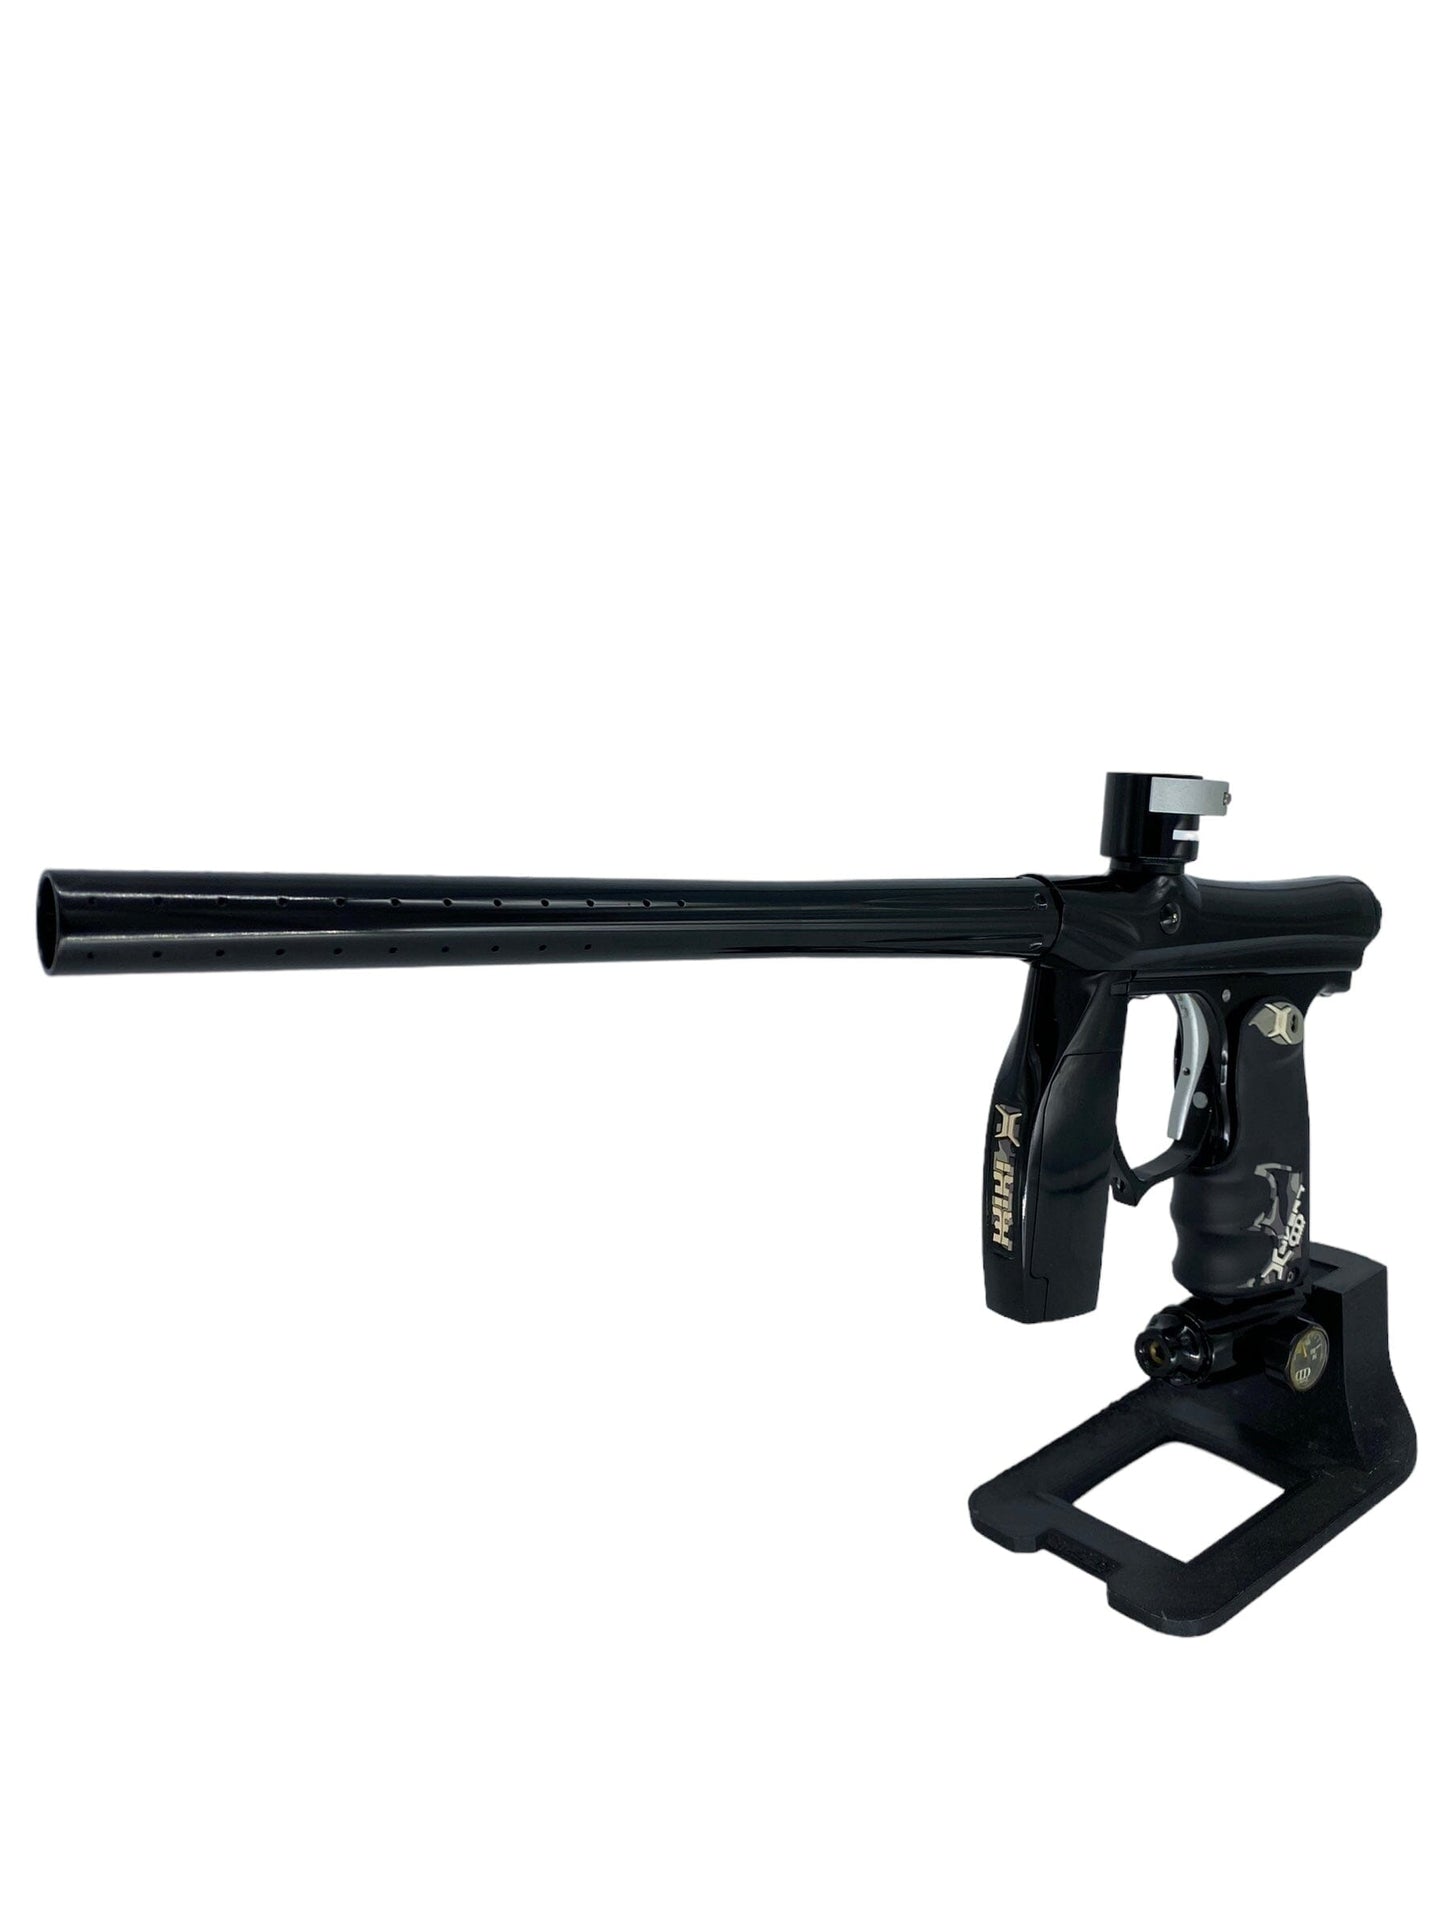 Used Invert Mini Paintball Gun Paintball Gun from CPXBrosPaintball Buy/Sell/Trade Paintball Markers, New Paintball Guns, Paintball Hoppers, Paintball Masks, and Hormesis Headbands